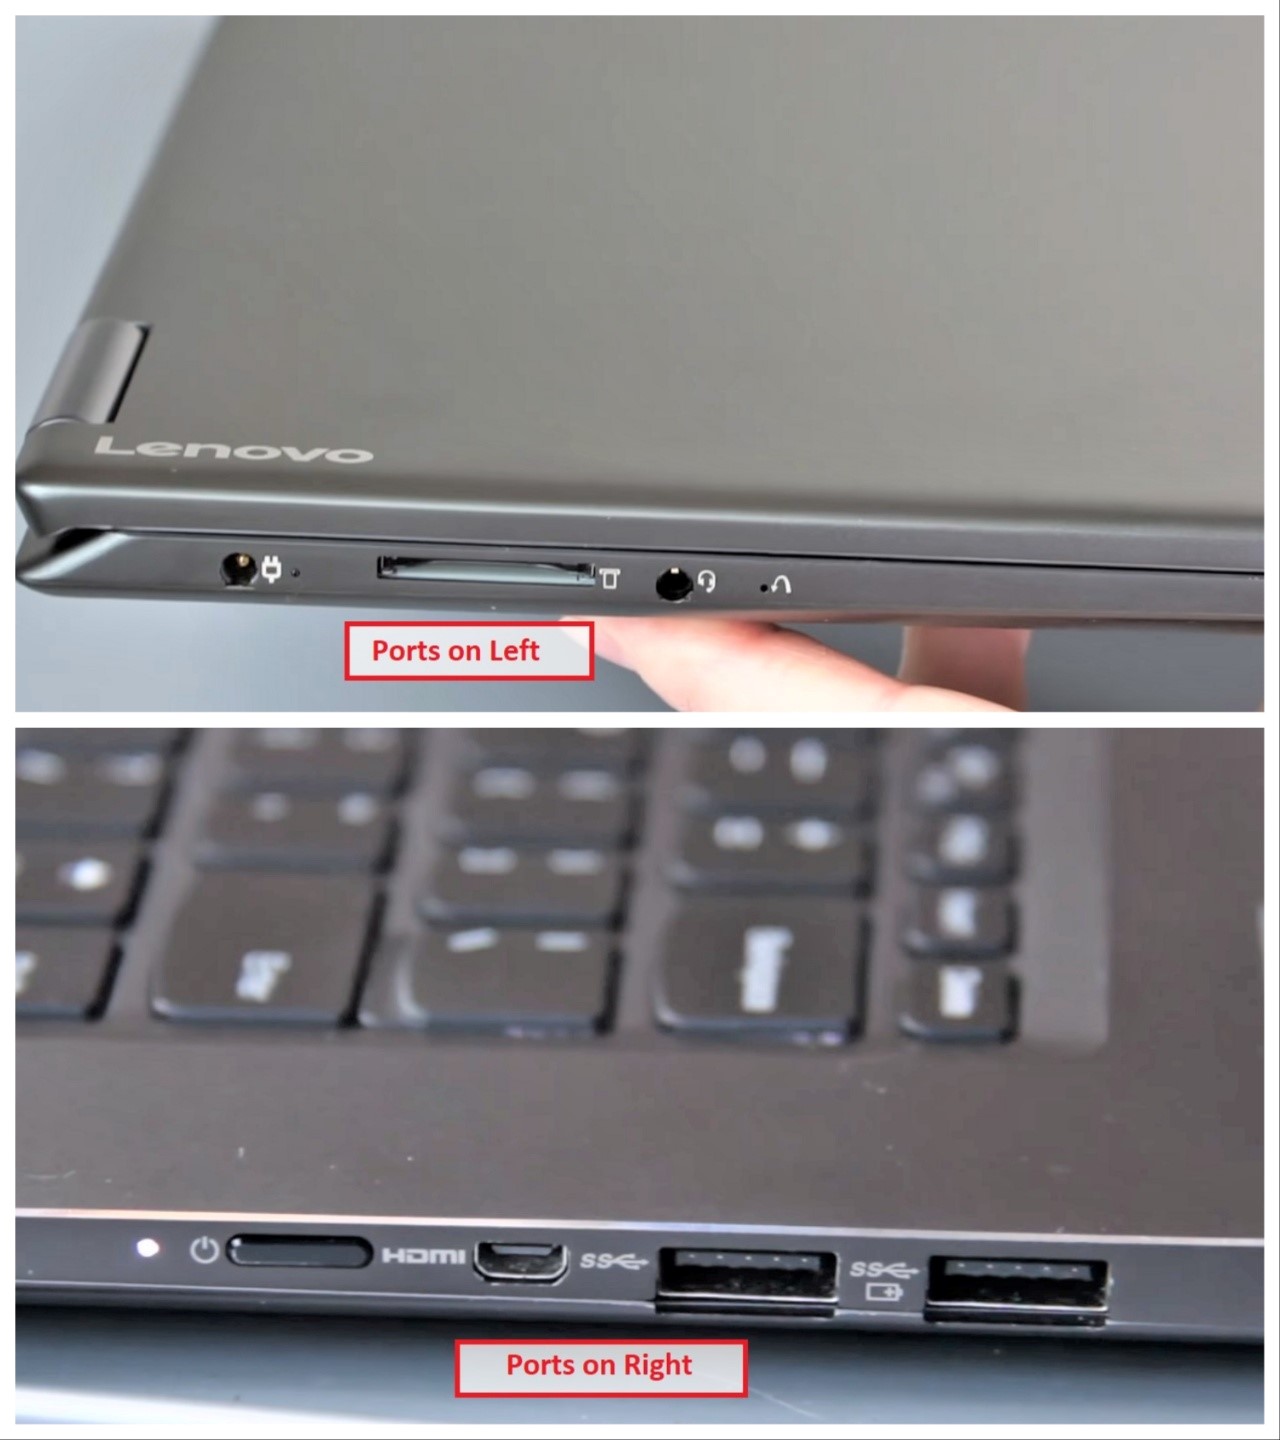 Lenovo Yoga 710 Ports